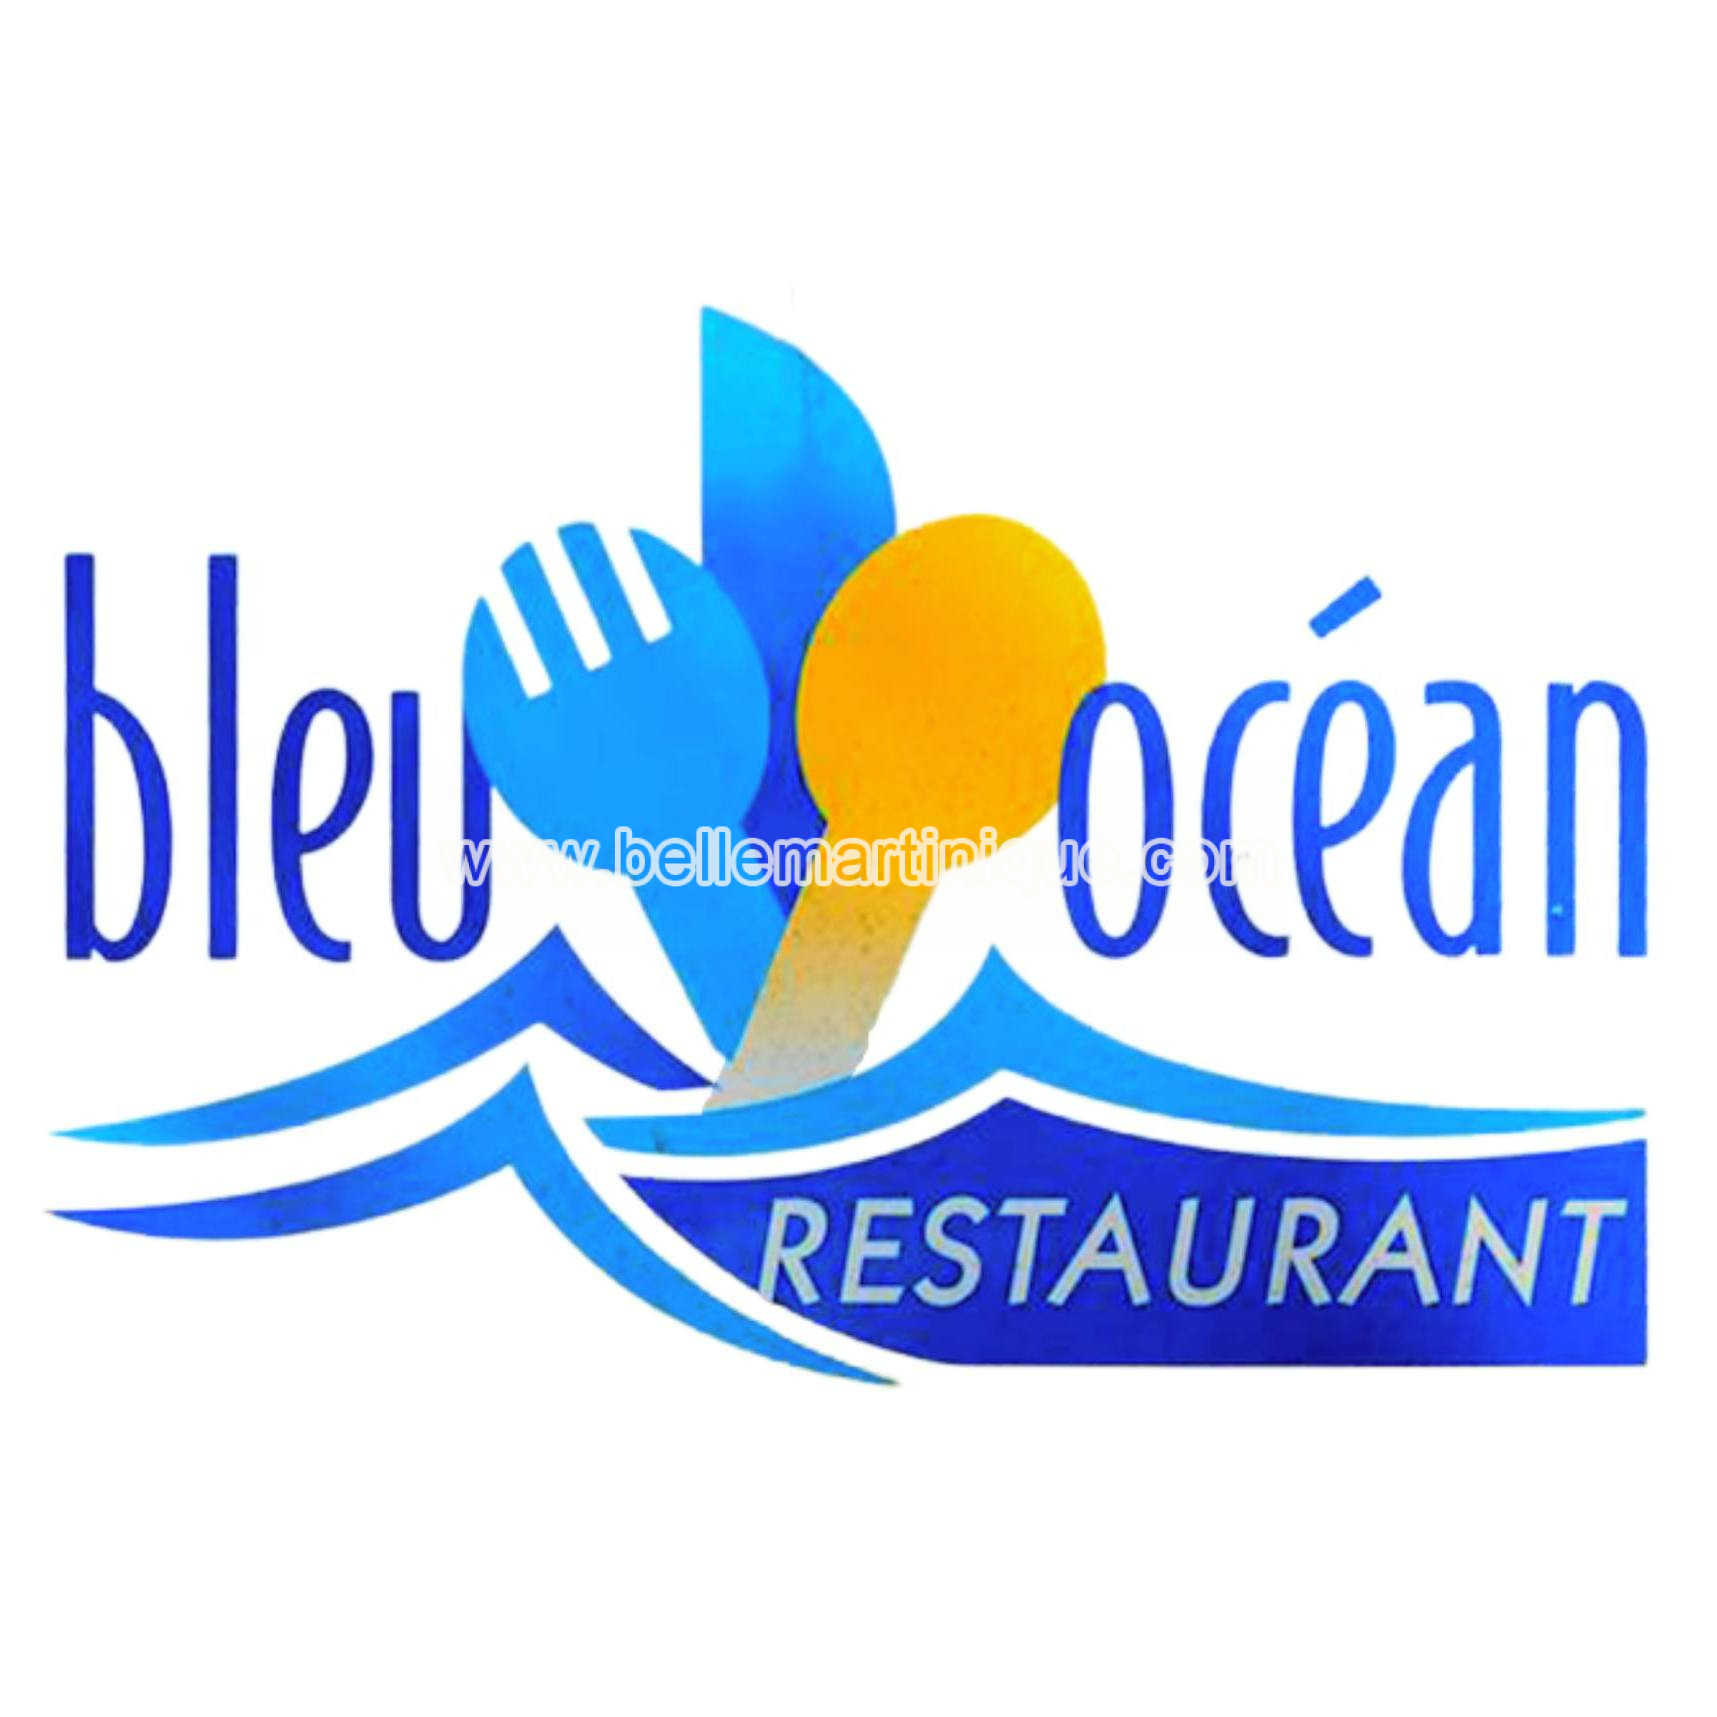 Restaurant Bleu Ocean - cosmy - plage - trinite - martinique - antilles - caraibes Logo